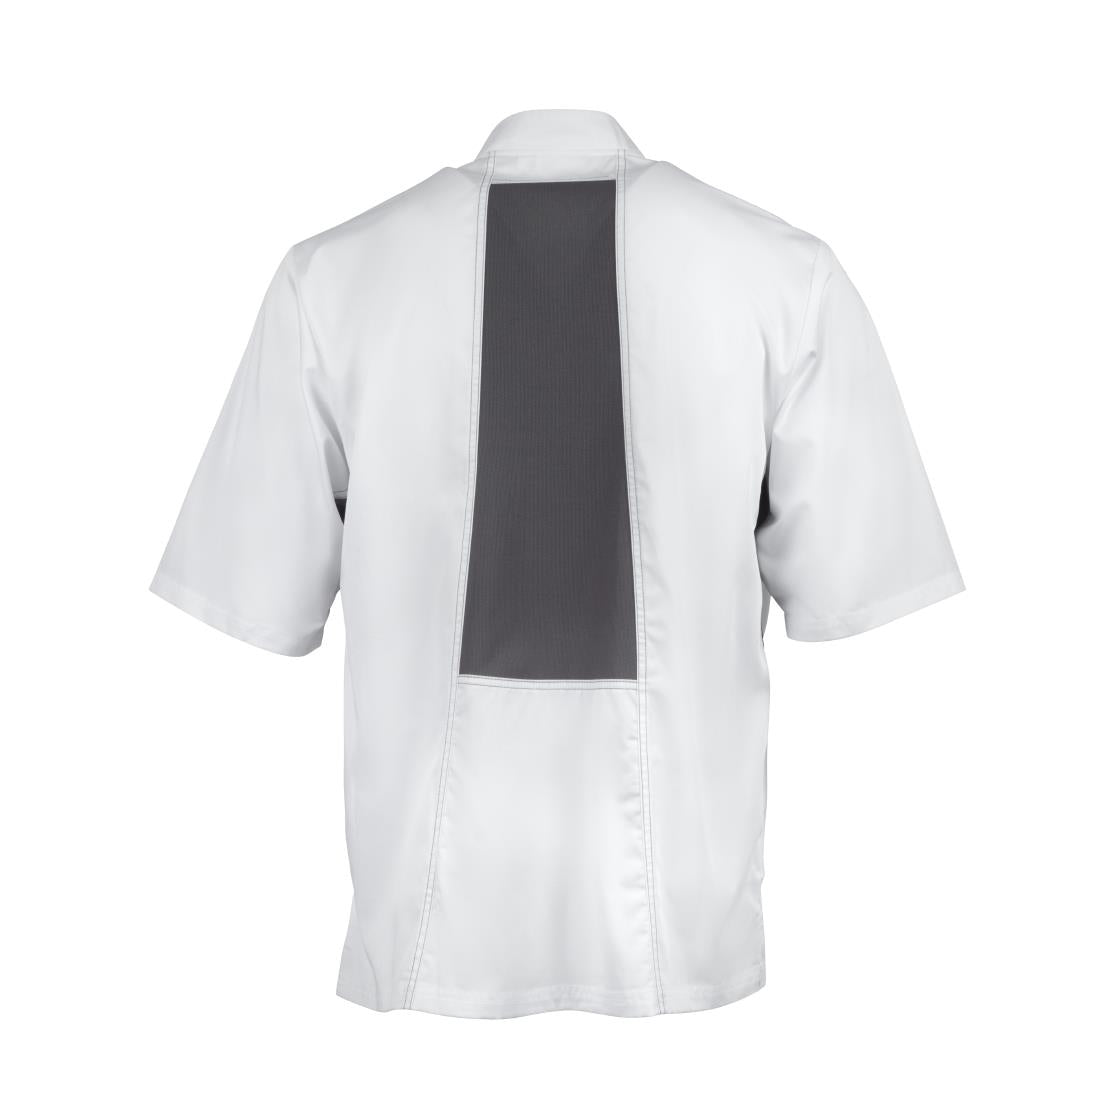 B205-M Chef Works Valais Signature Series Unisex Chefs Jacket White M